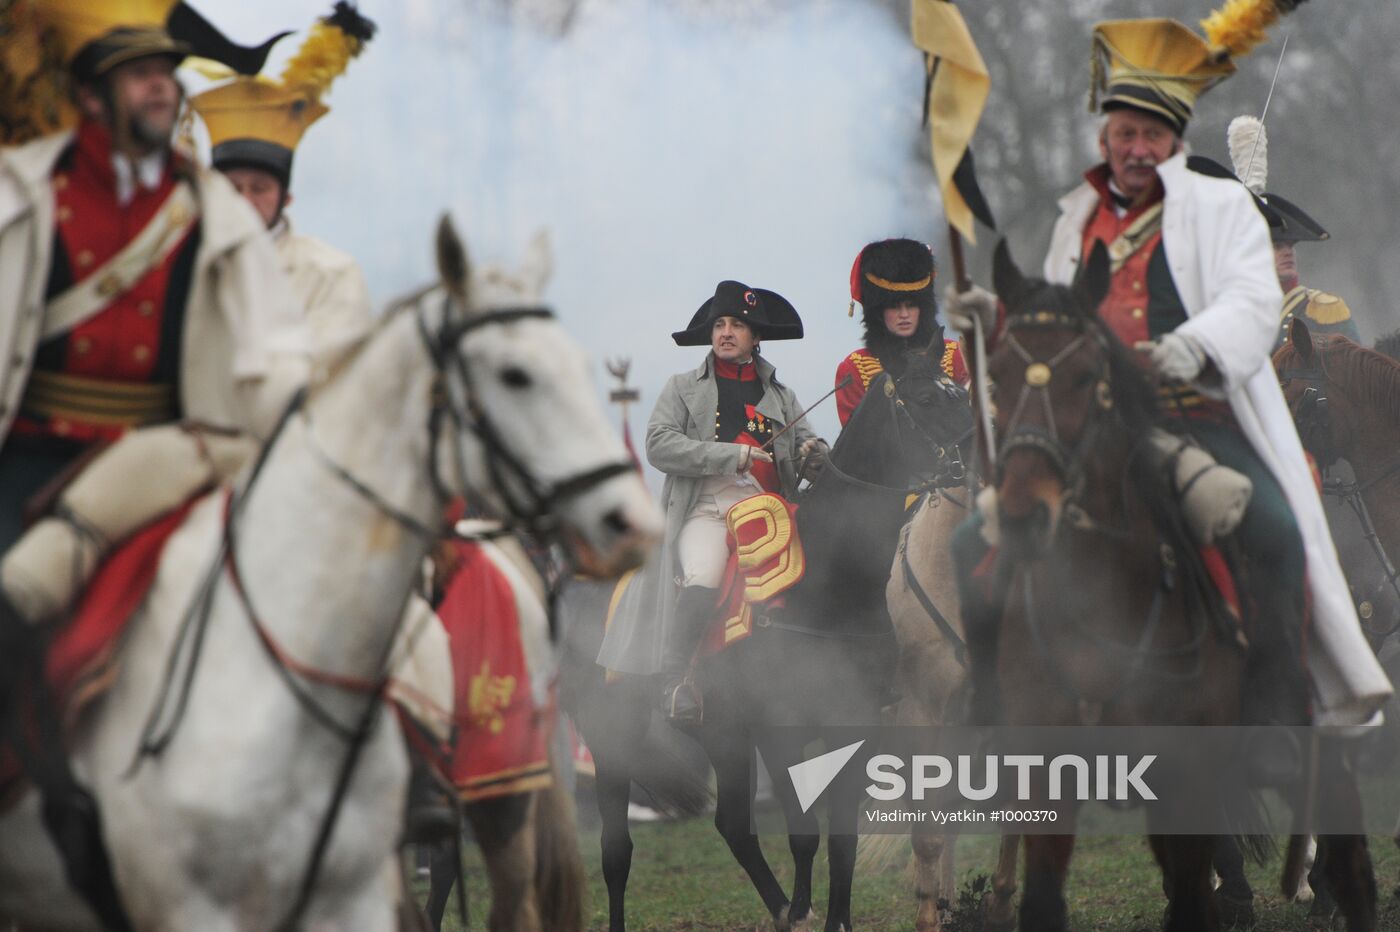 Battle of Austerlitz reenacted in Czech Republic